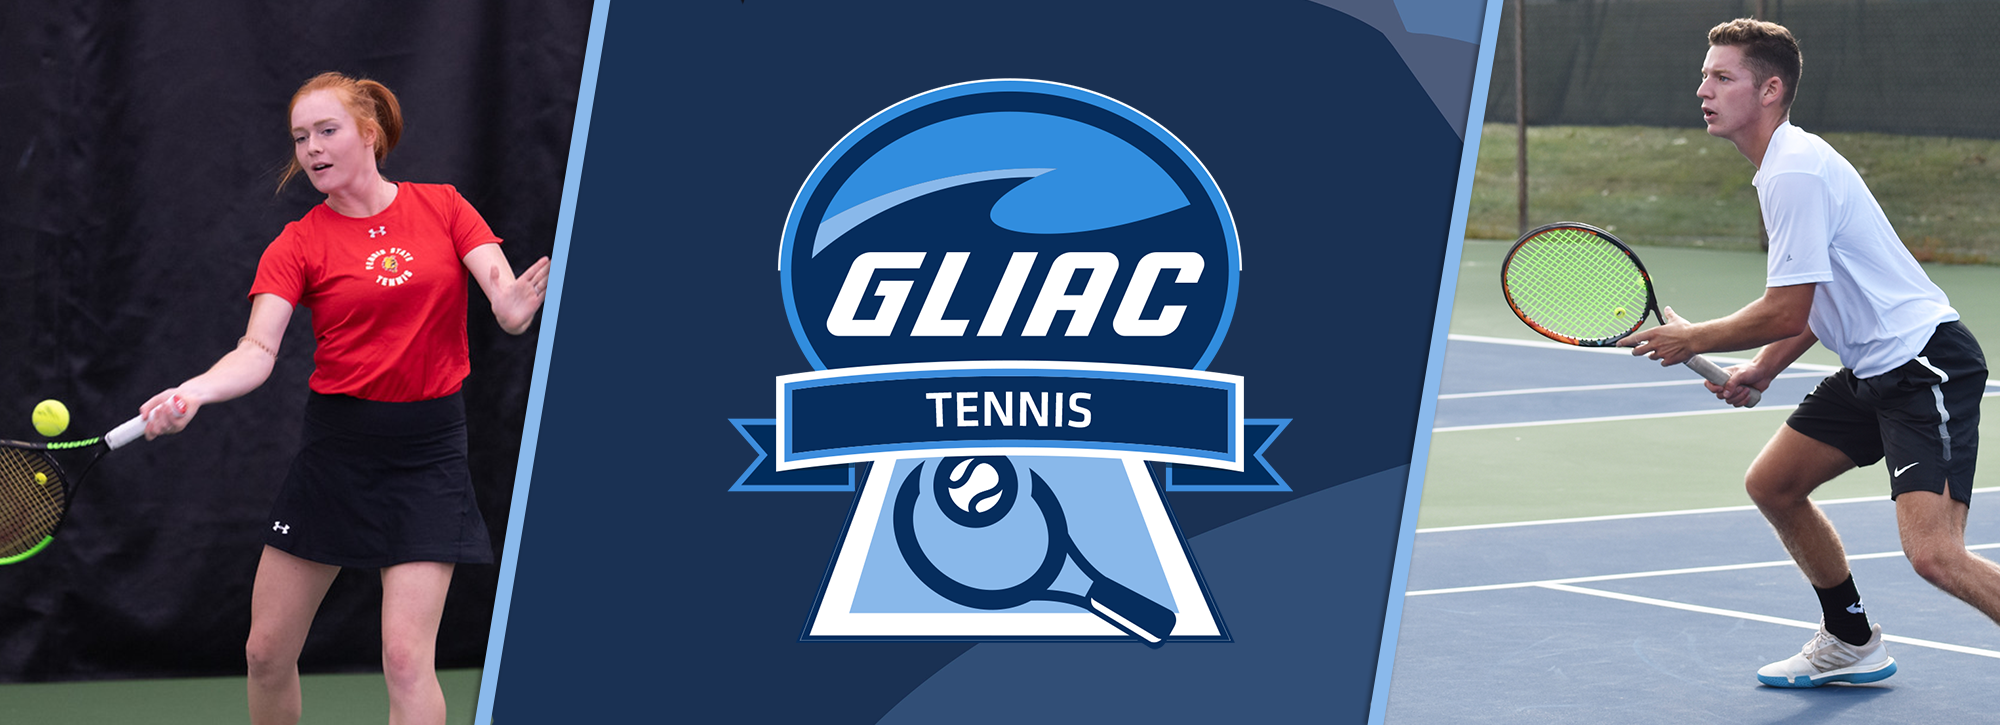 FSU's Waller, WSU's Spicer Earn GLIAC Tennis Player of the Week Honors